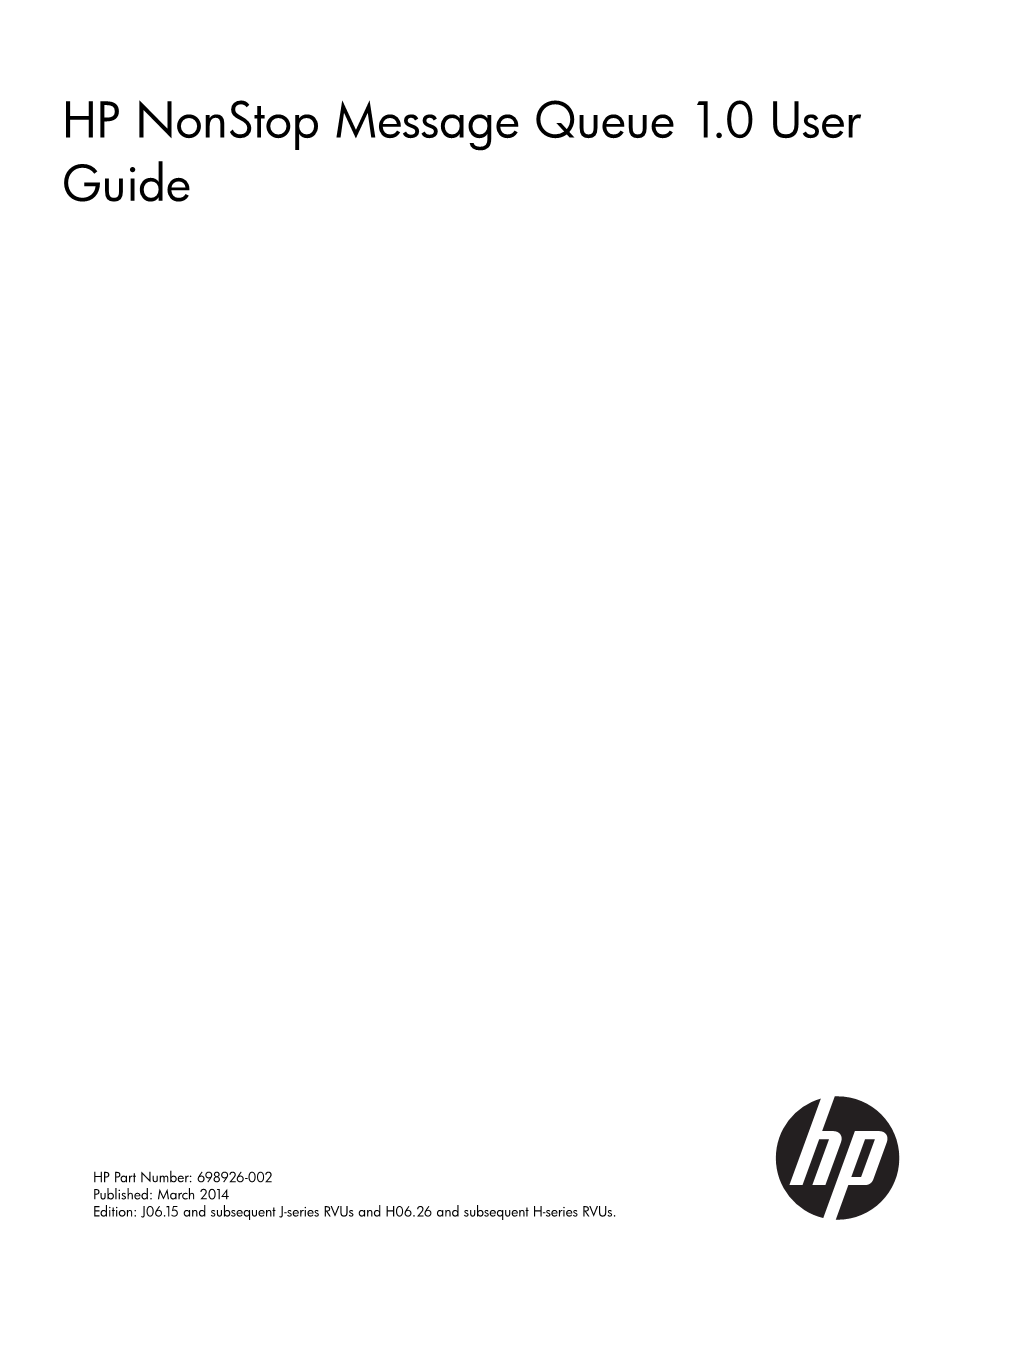 HP Nonstop Message Queue 1.0 User Guide